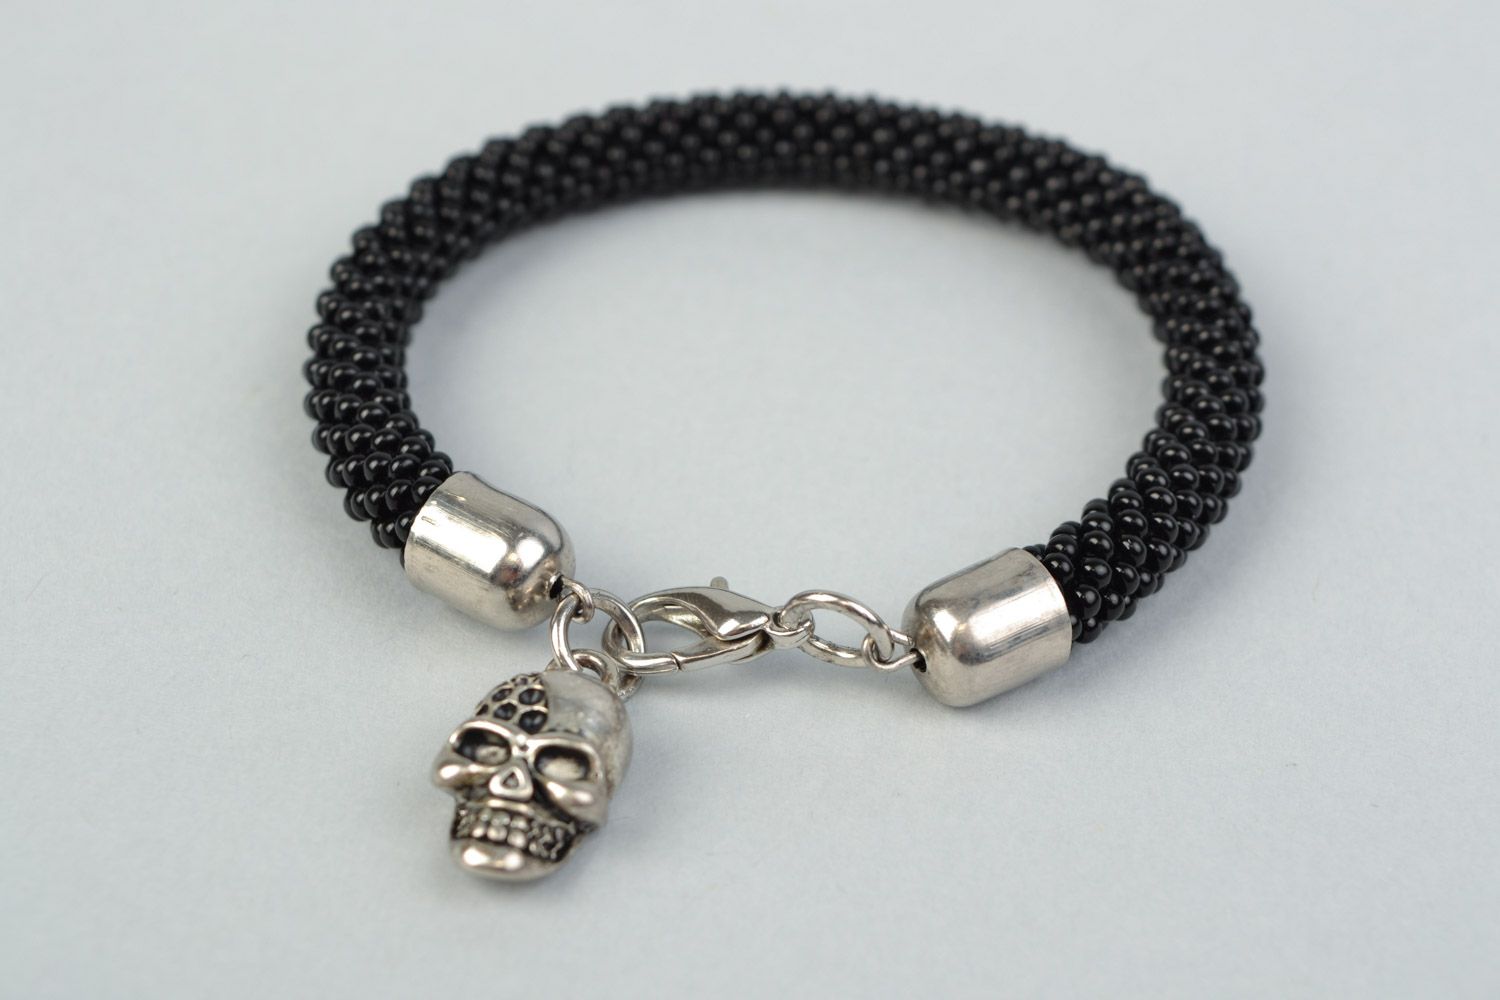 Handmade beaded cord women's wrist bracelet in black color with skull charm photo 4